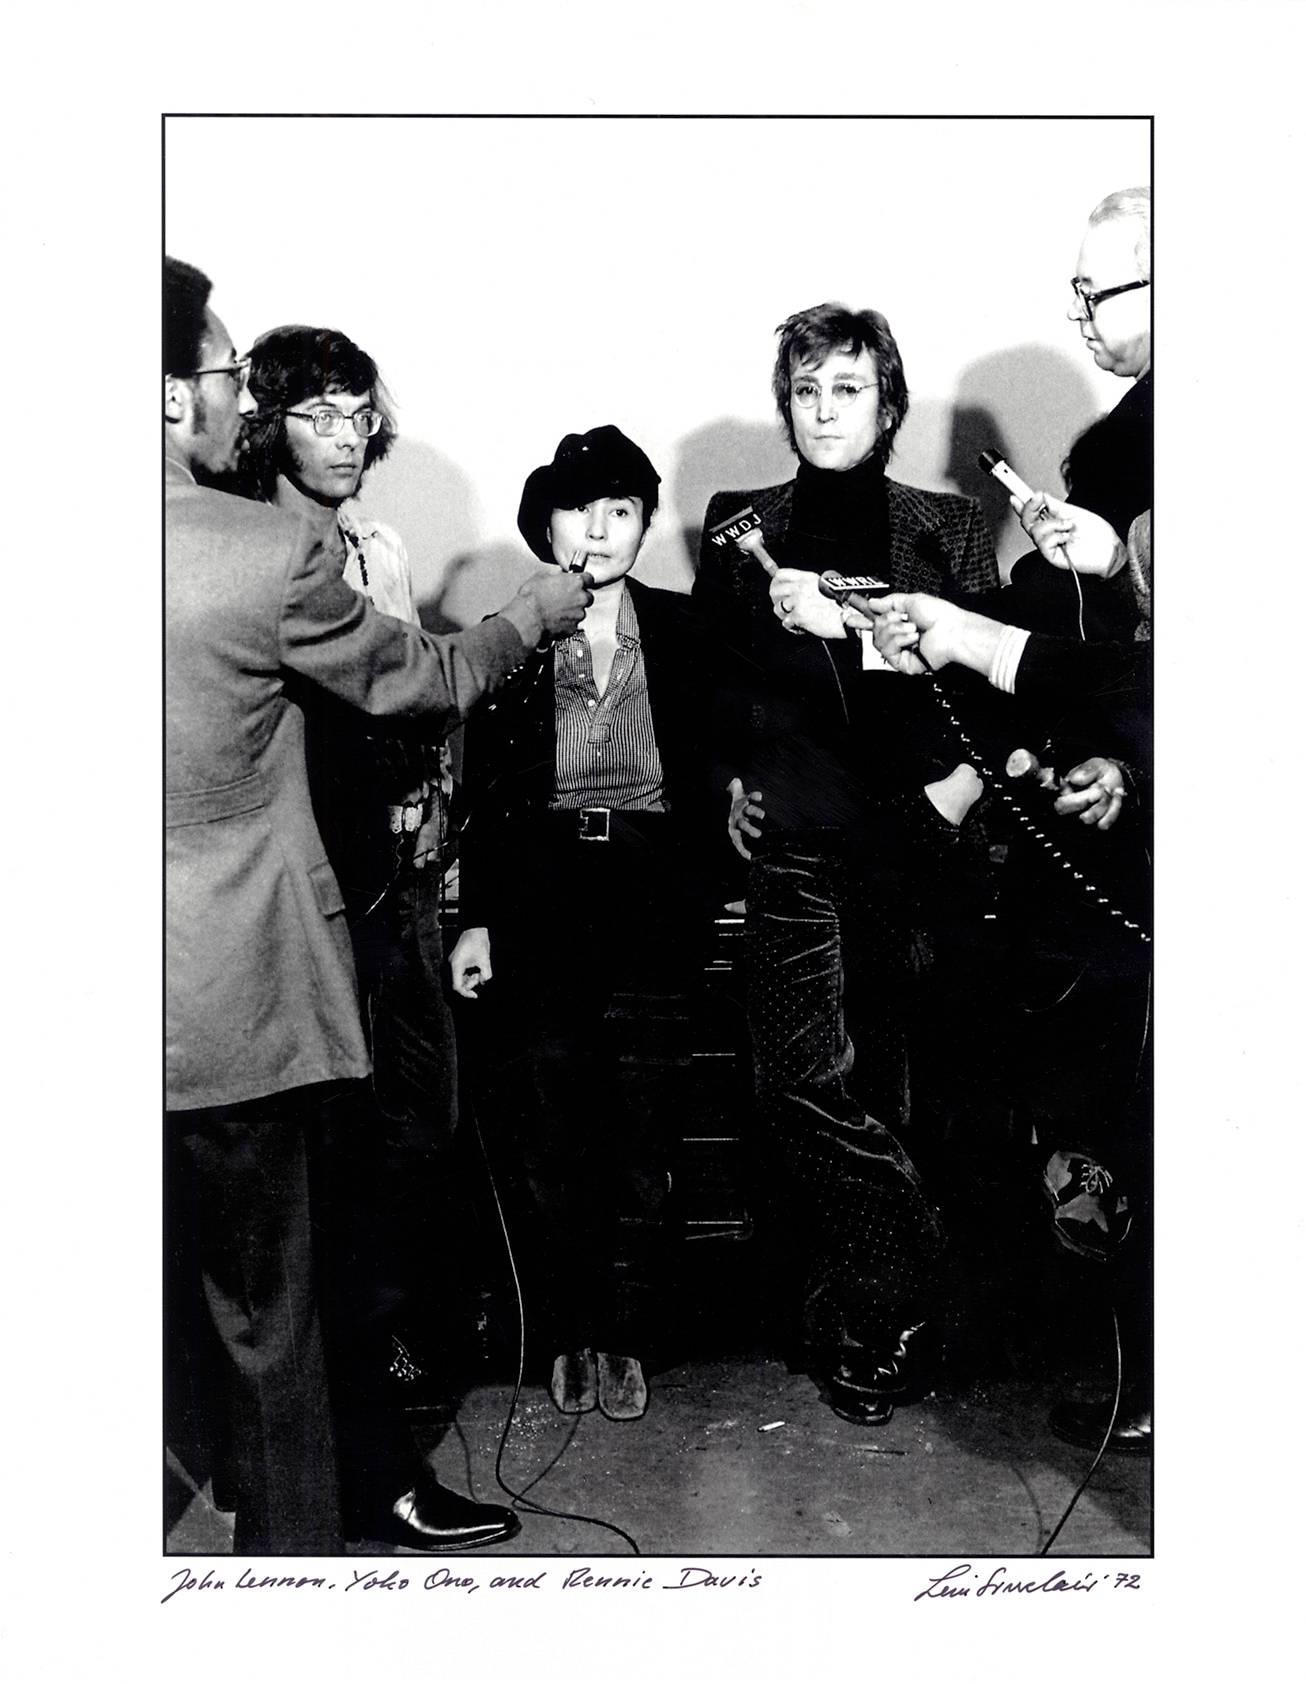 Leni Sinclair John Lennon & Yoko Ono fotografieren Detroit, 1972:

Fotografiert von der legendären Detroiter Fotografin Leni Sinclair, der Kresge Foundation's Eminent Artist of the Year 2016 (siehe The Guardian UK Photo Section, 28. Januar